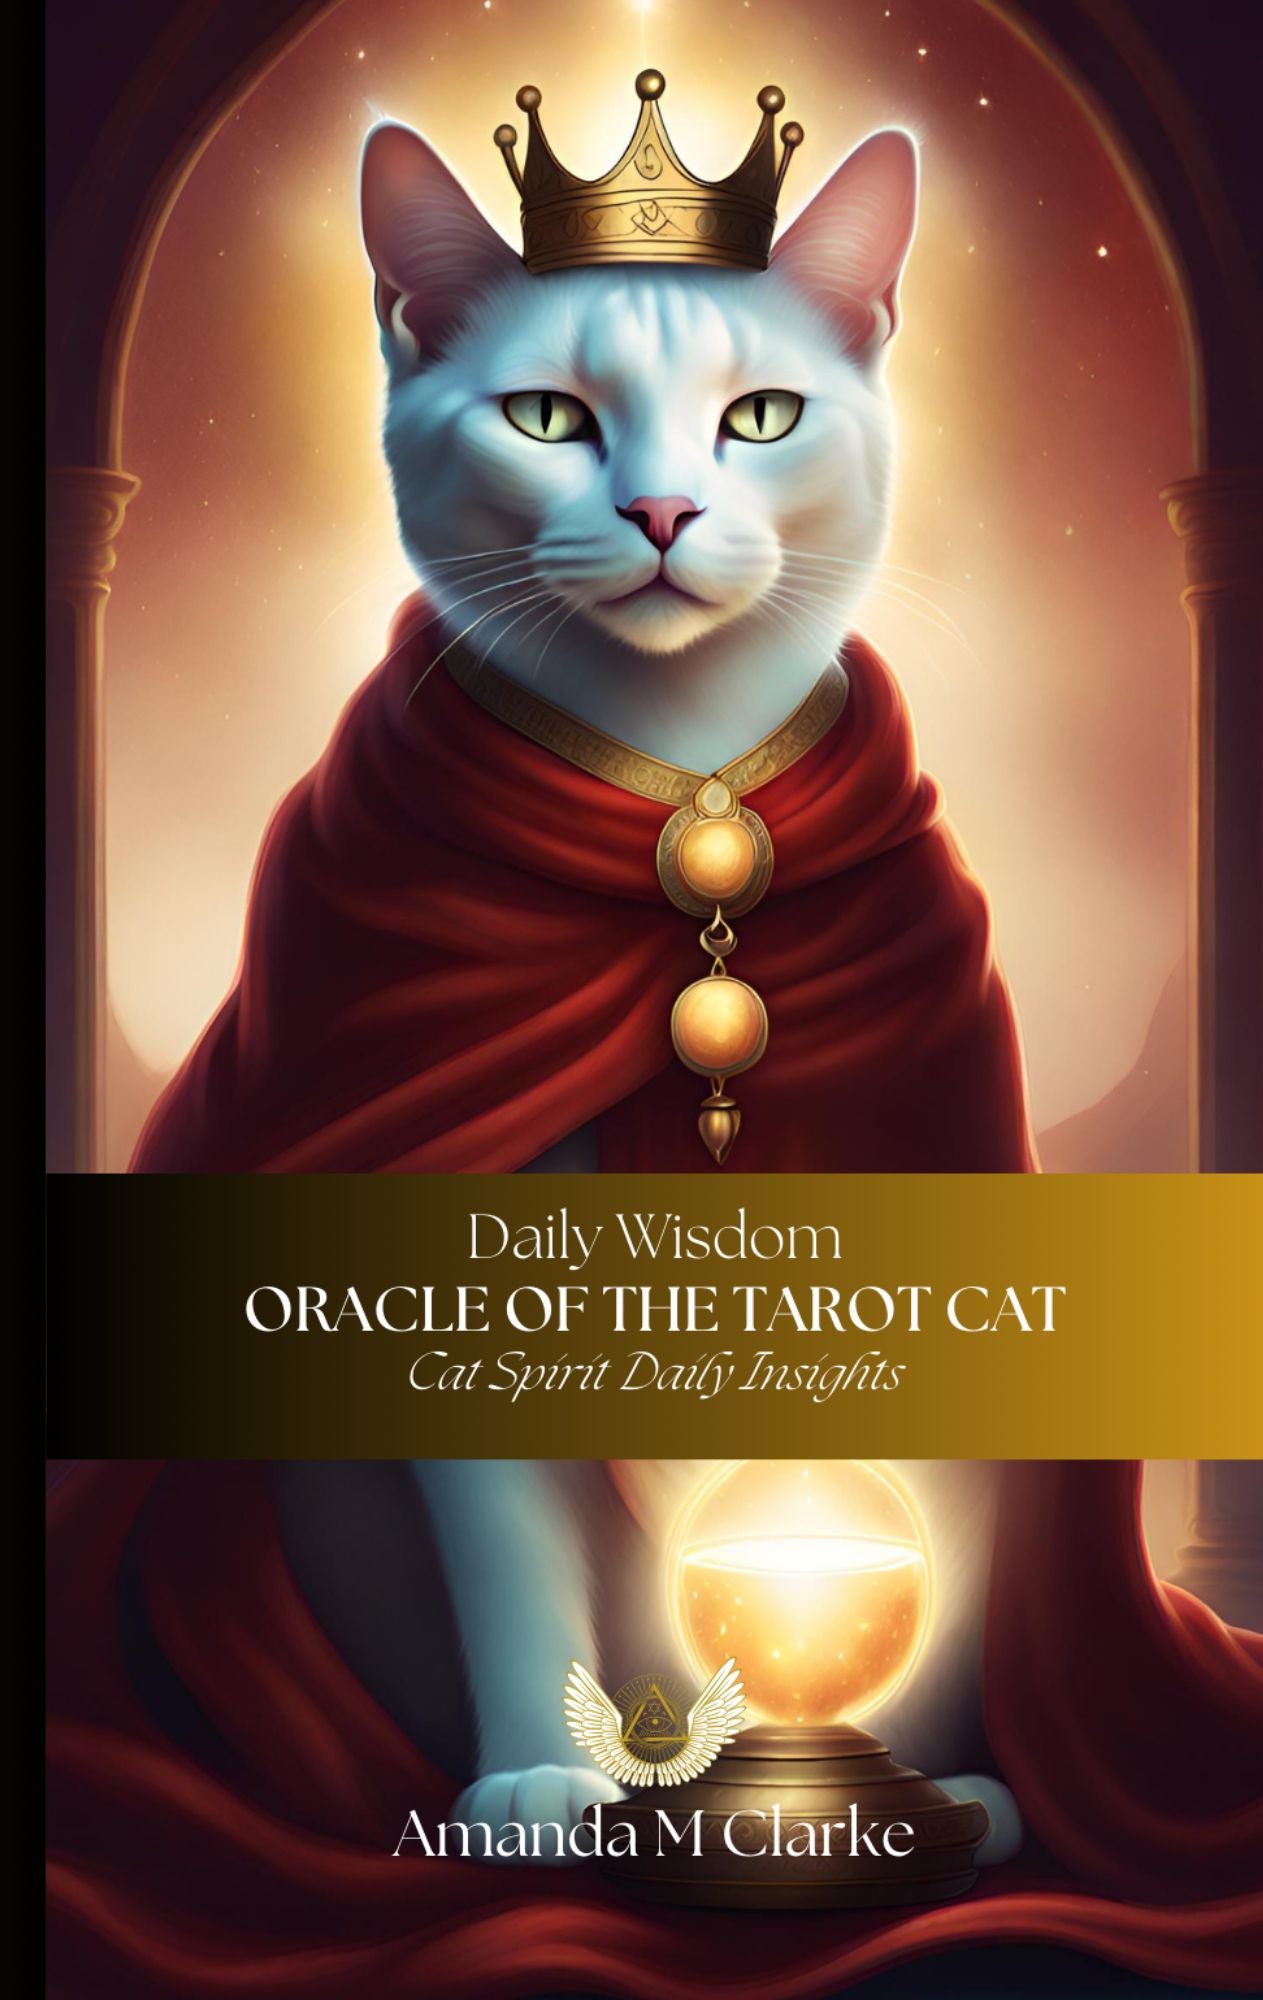 Oracle of the Tarot Cat - Cat spirit Daily Insight